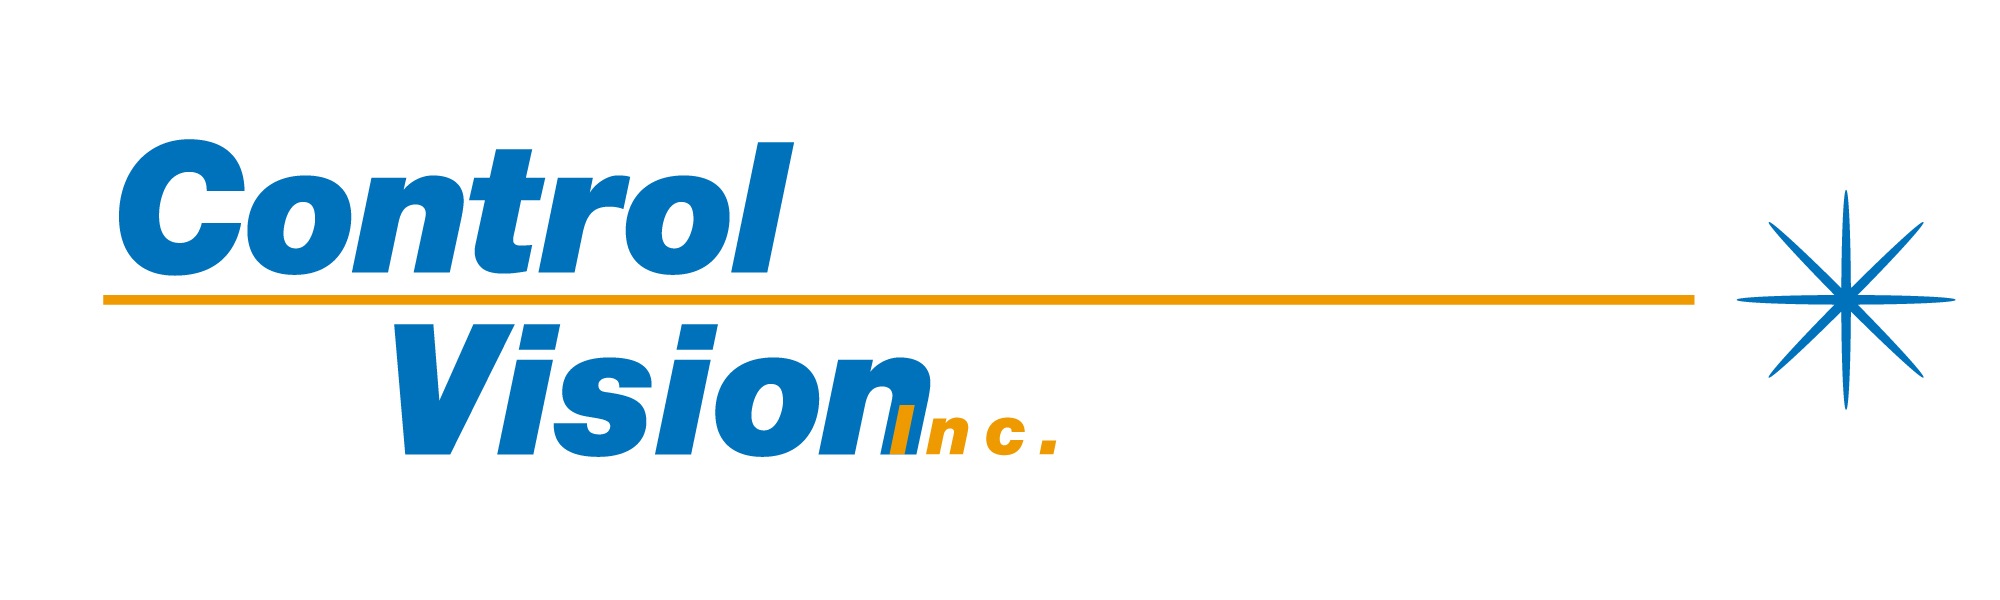 Control Vision, Inc Logo